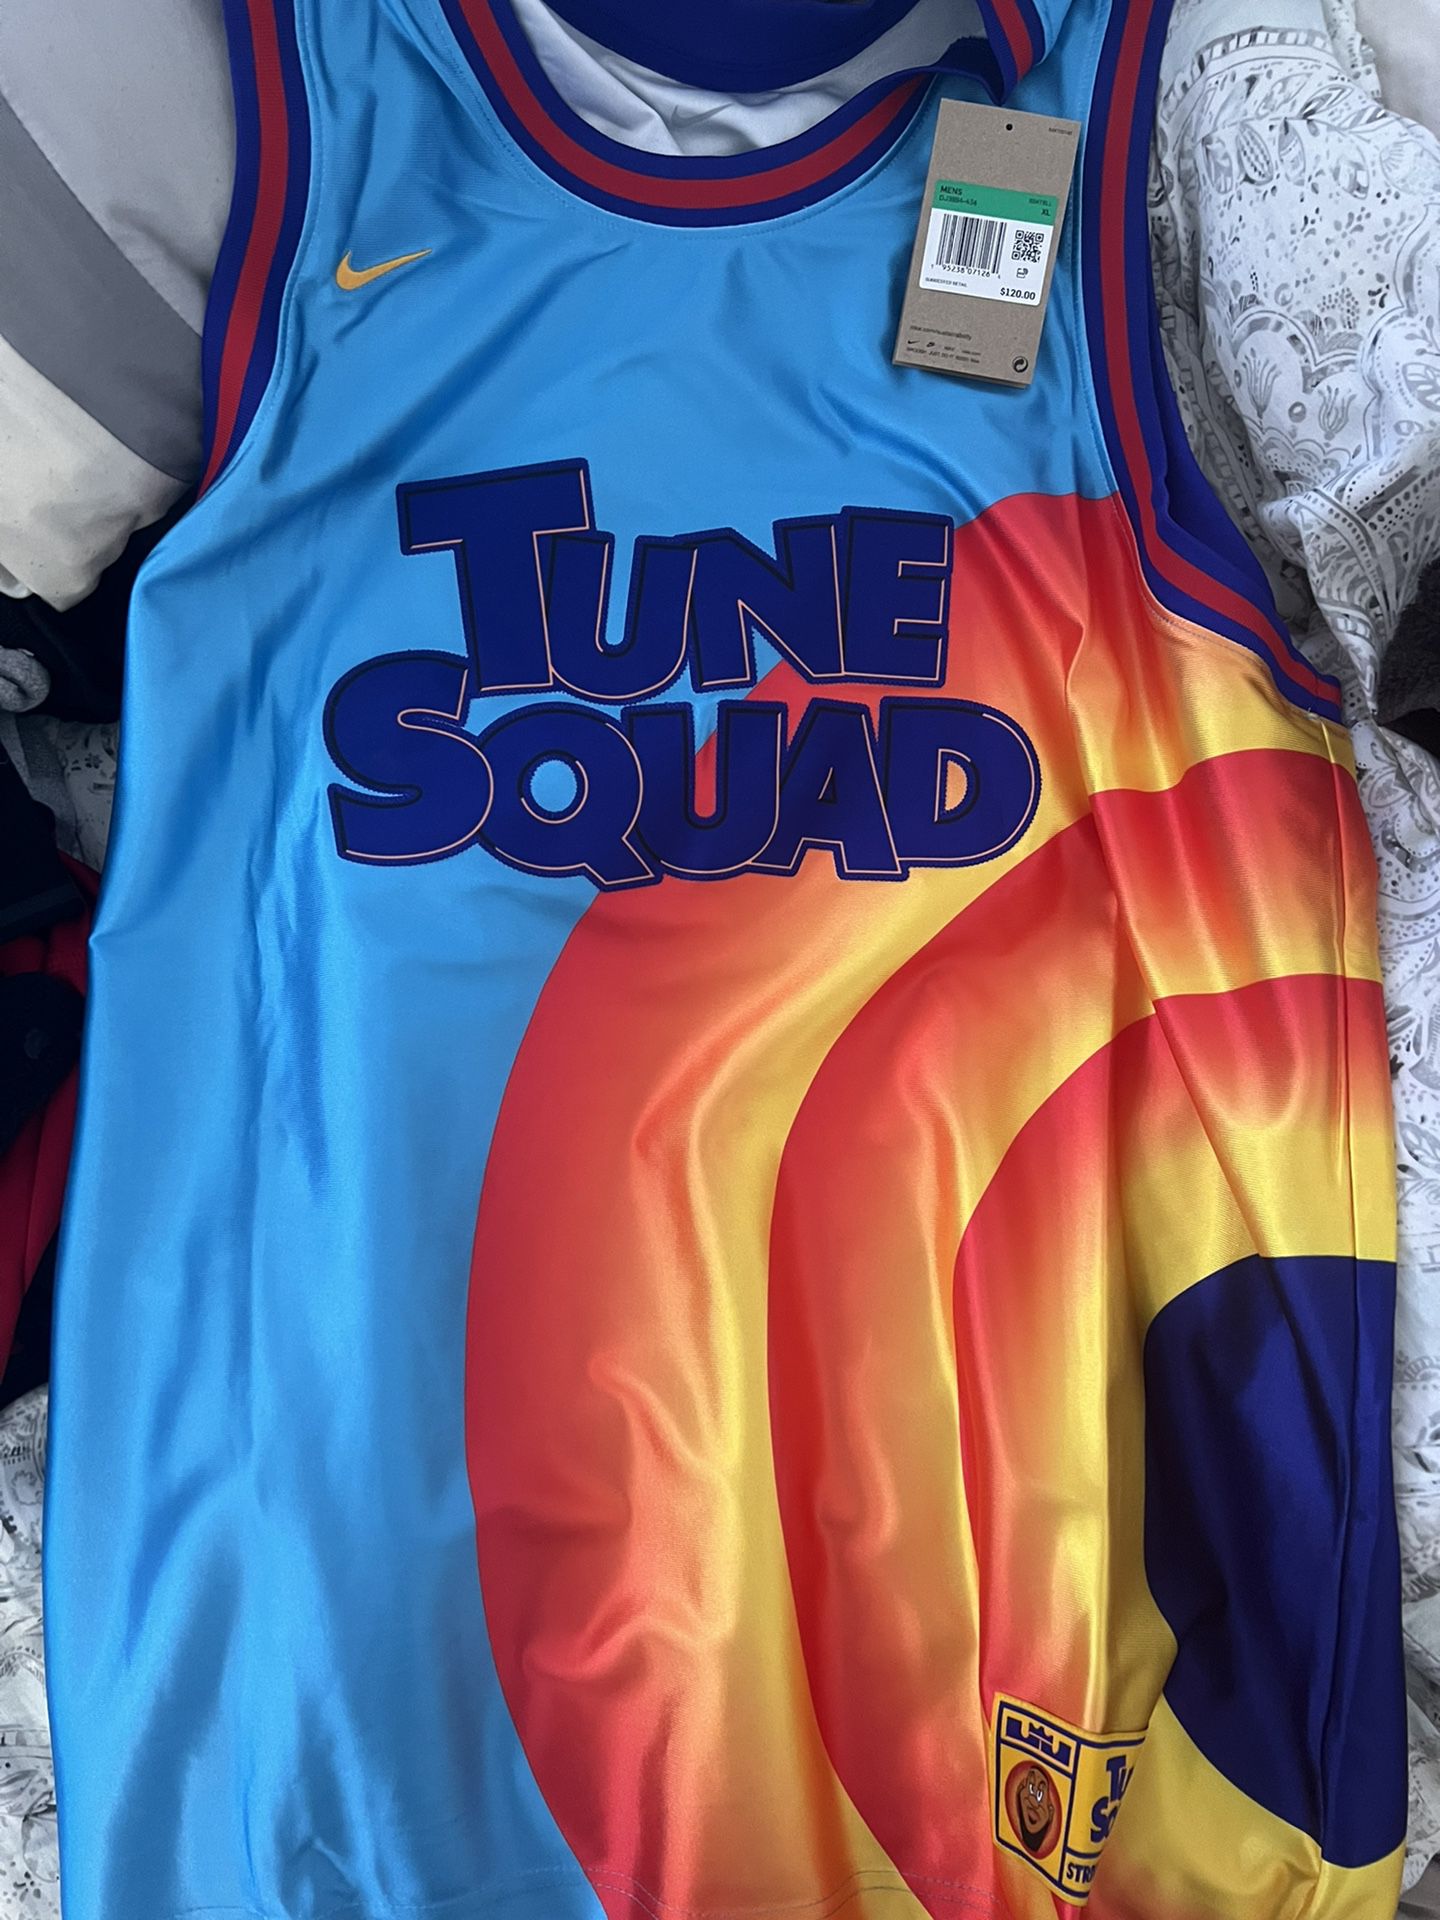 Tune squad Jersey XL